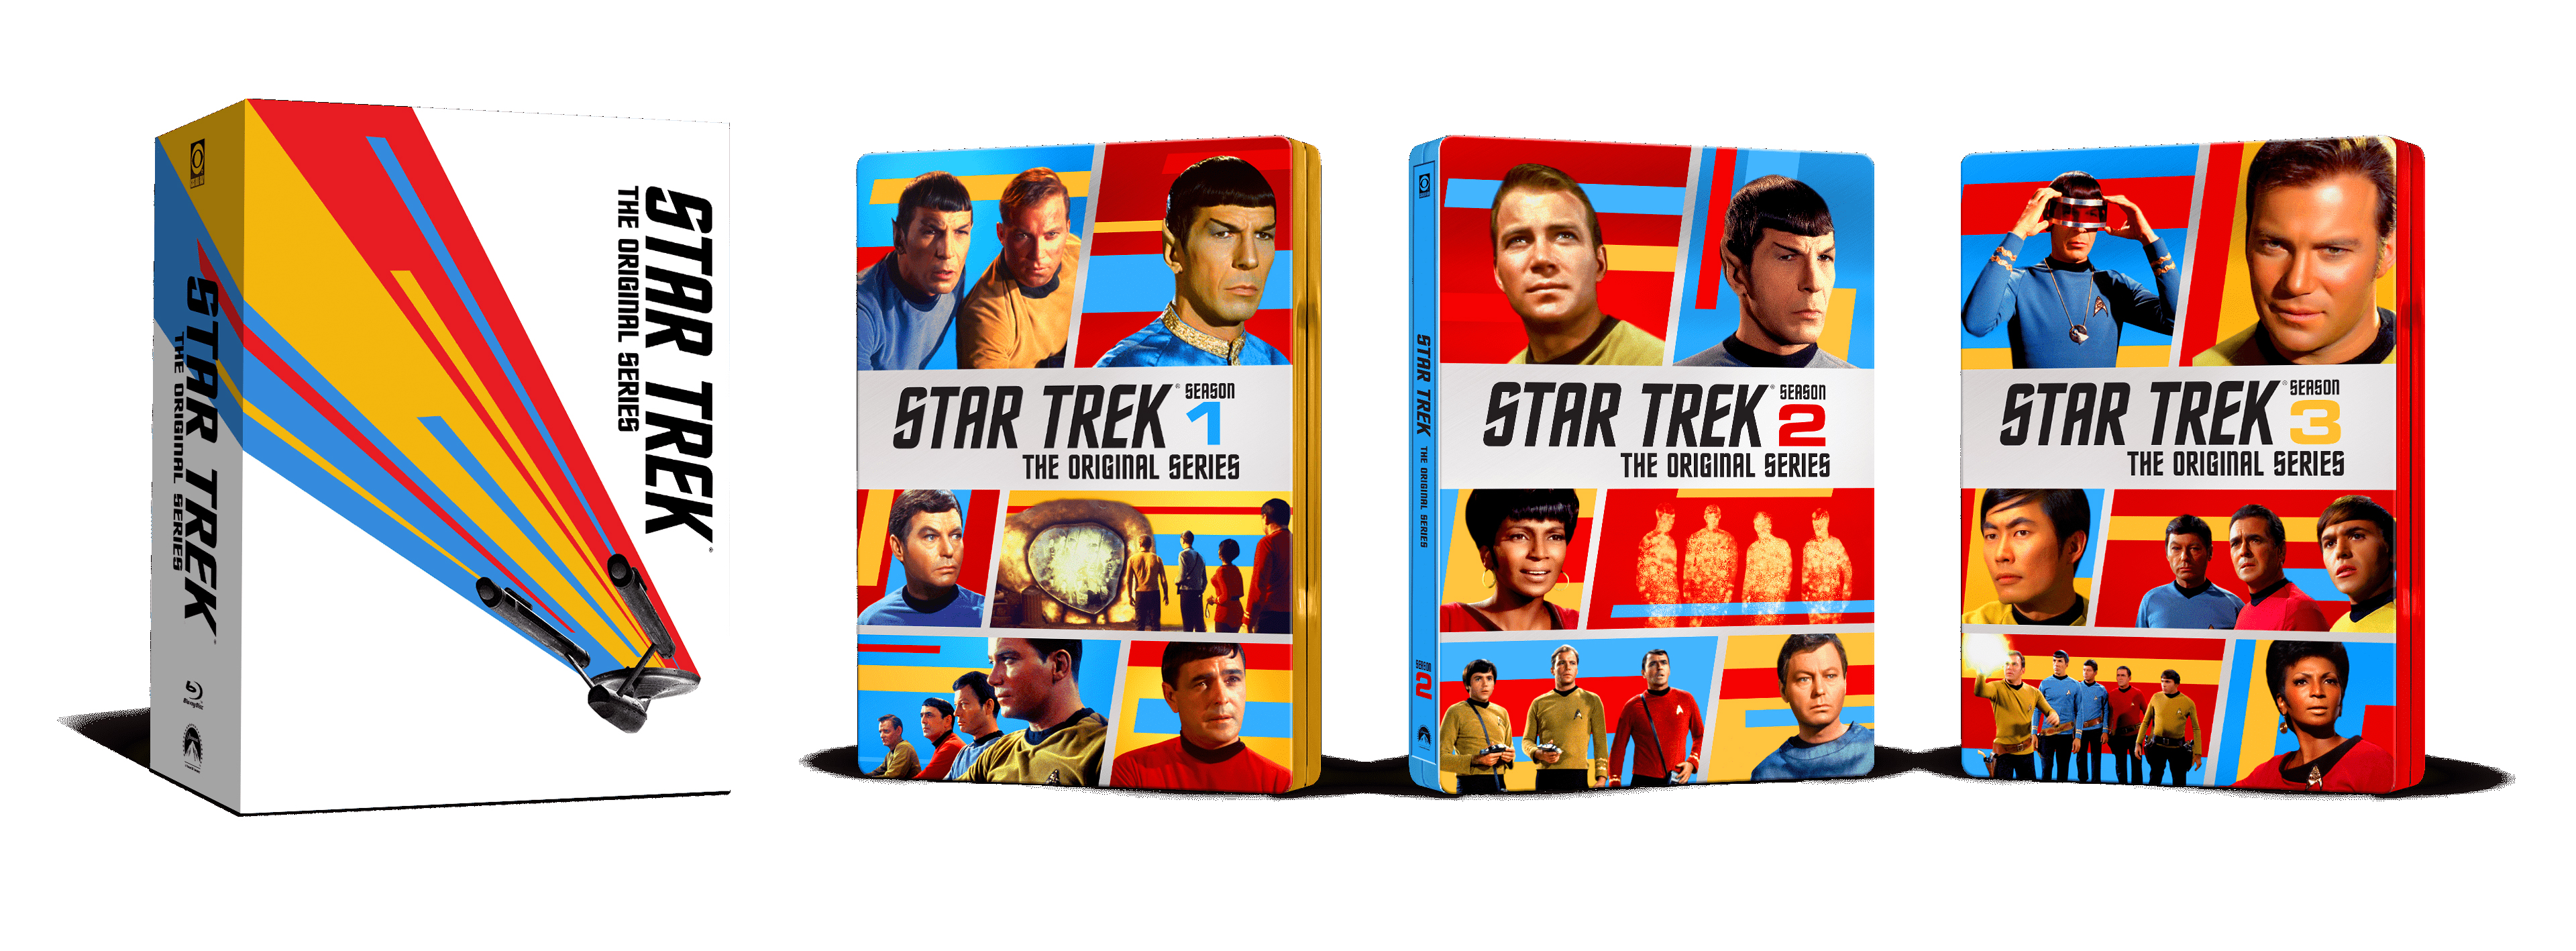 Star Trek: The Original Series The Complete Series [Blu-ray